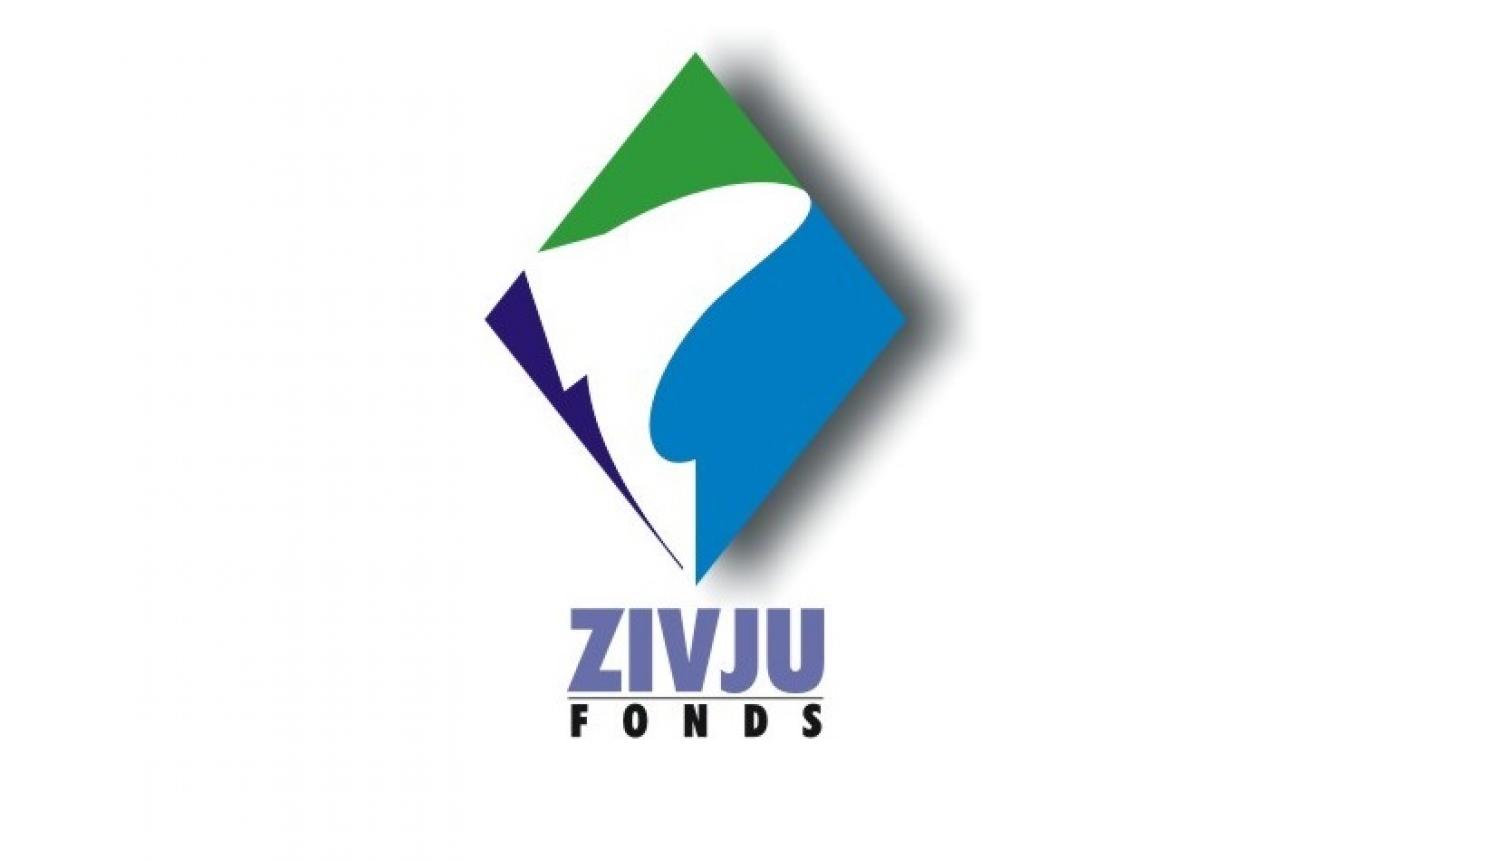 FOTO: Zivju fonds logo